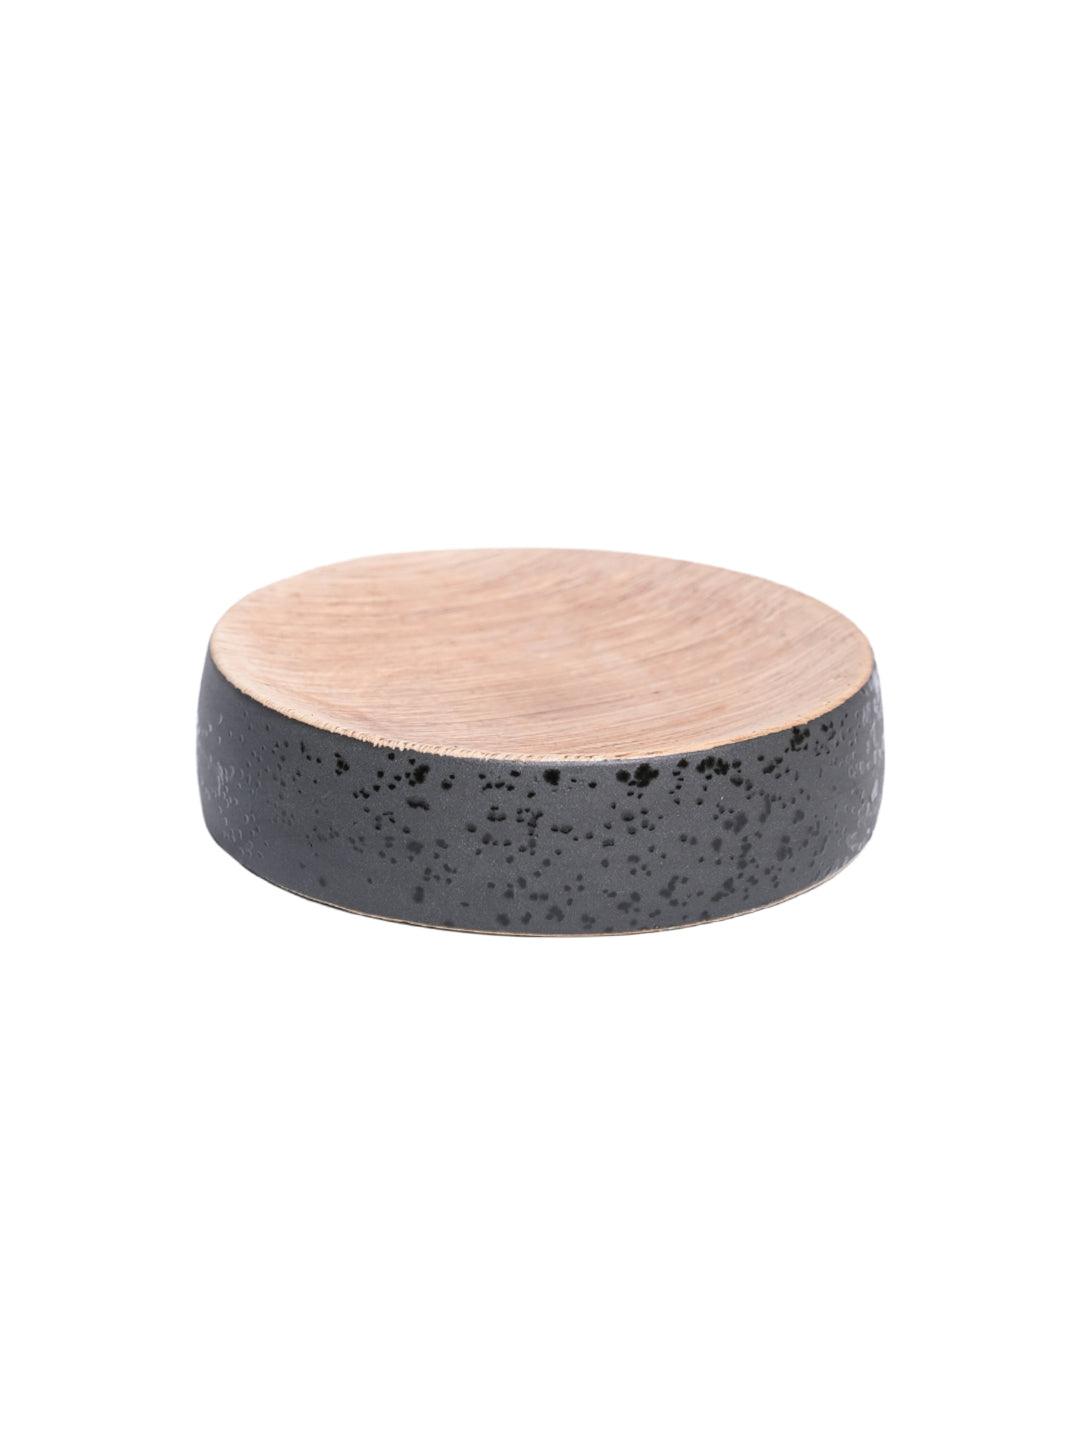 Black Ceramic Pear Shaped Bathroom Set - Matte, Stone Finish - MARKET 99